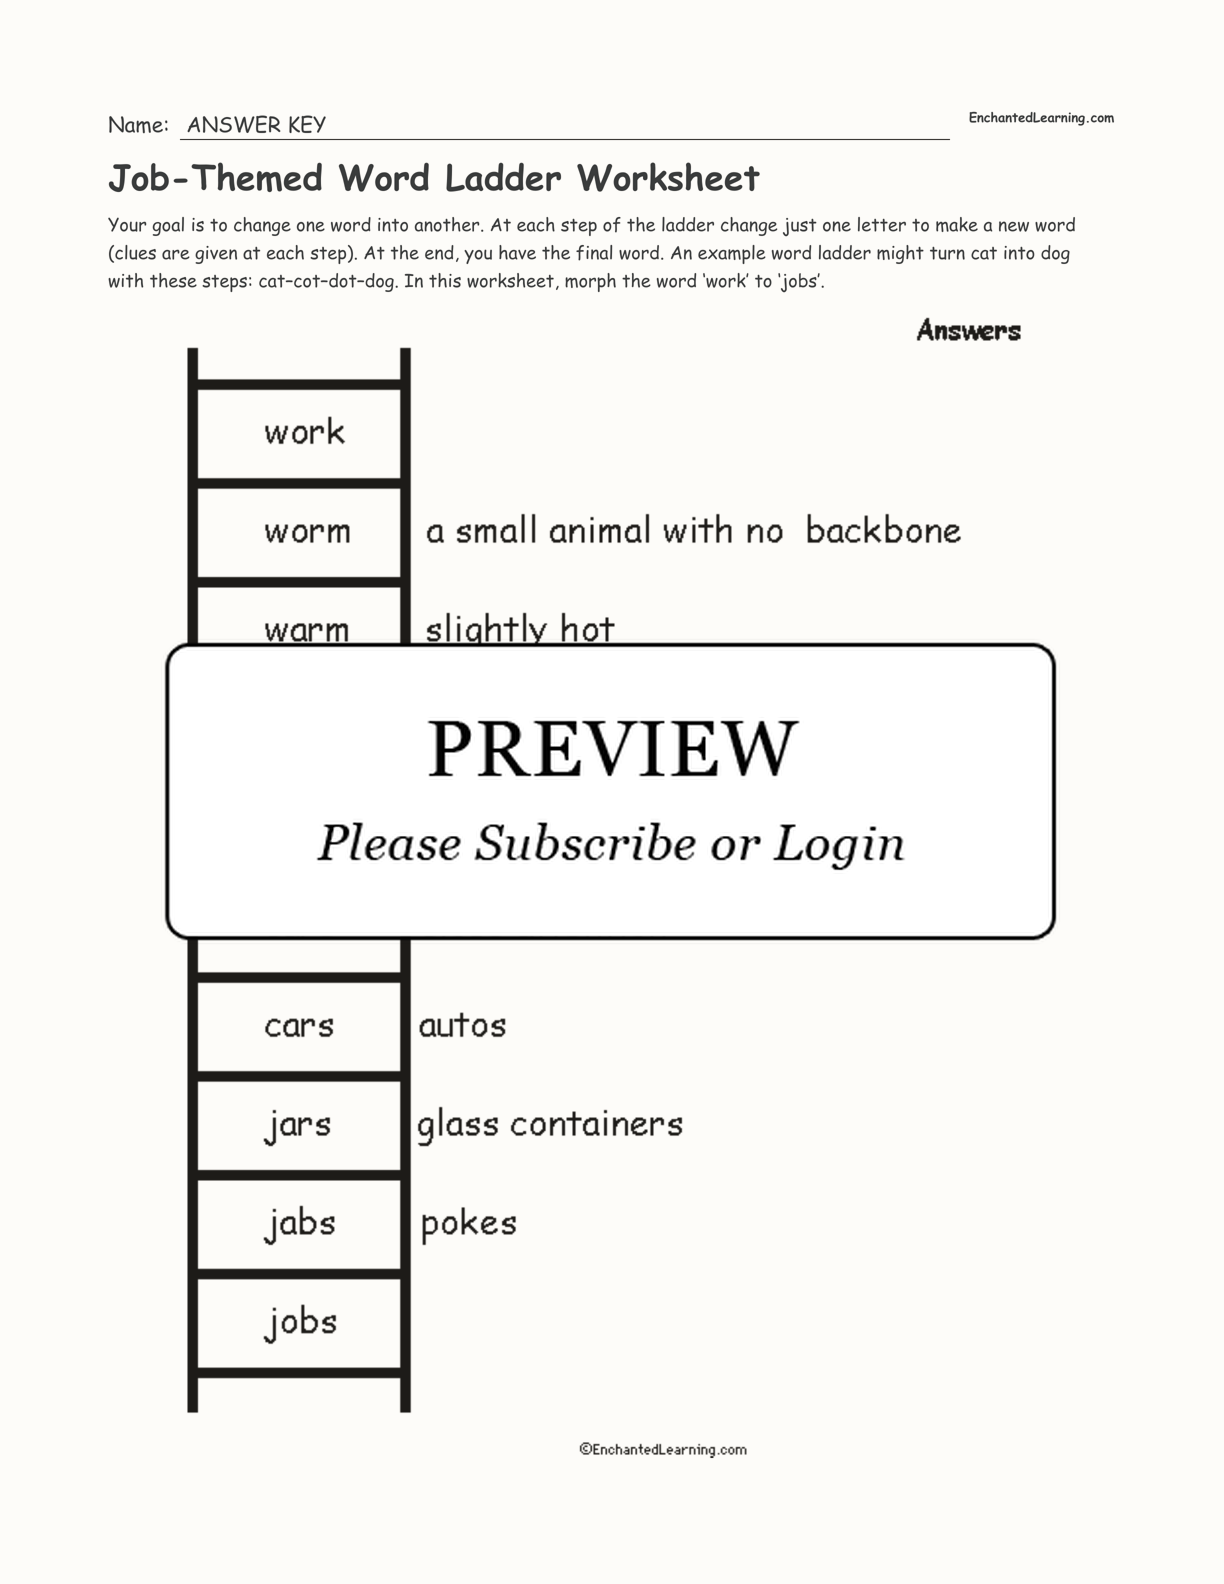 Job-Themed Word Ladder Worksheet interactive worksheet page 2